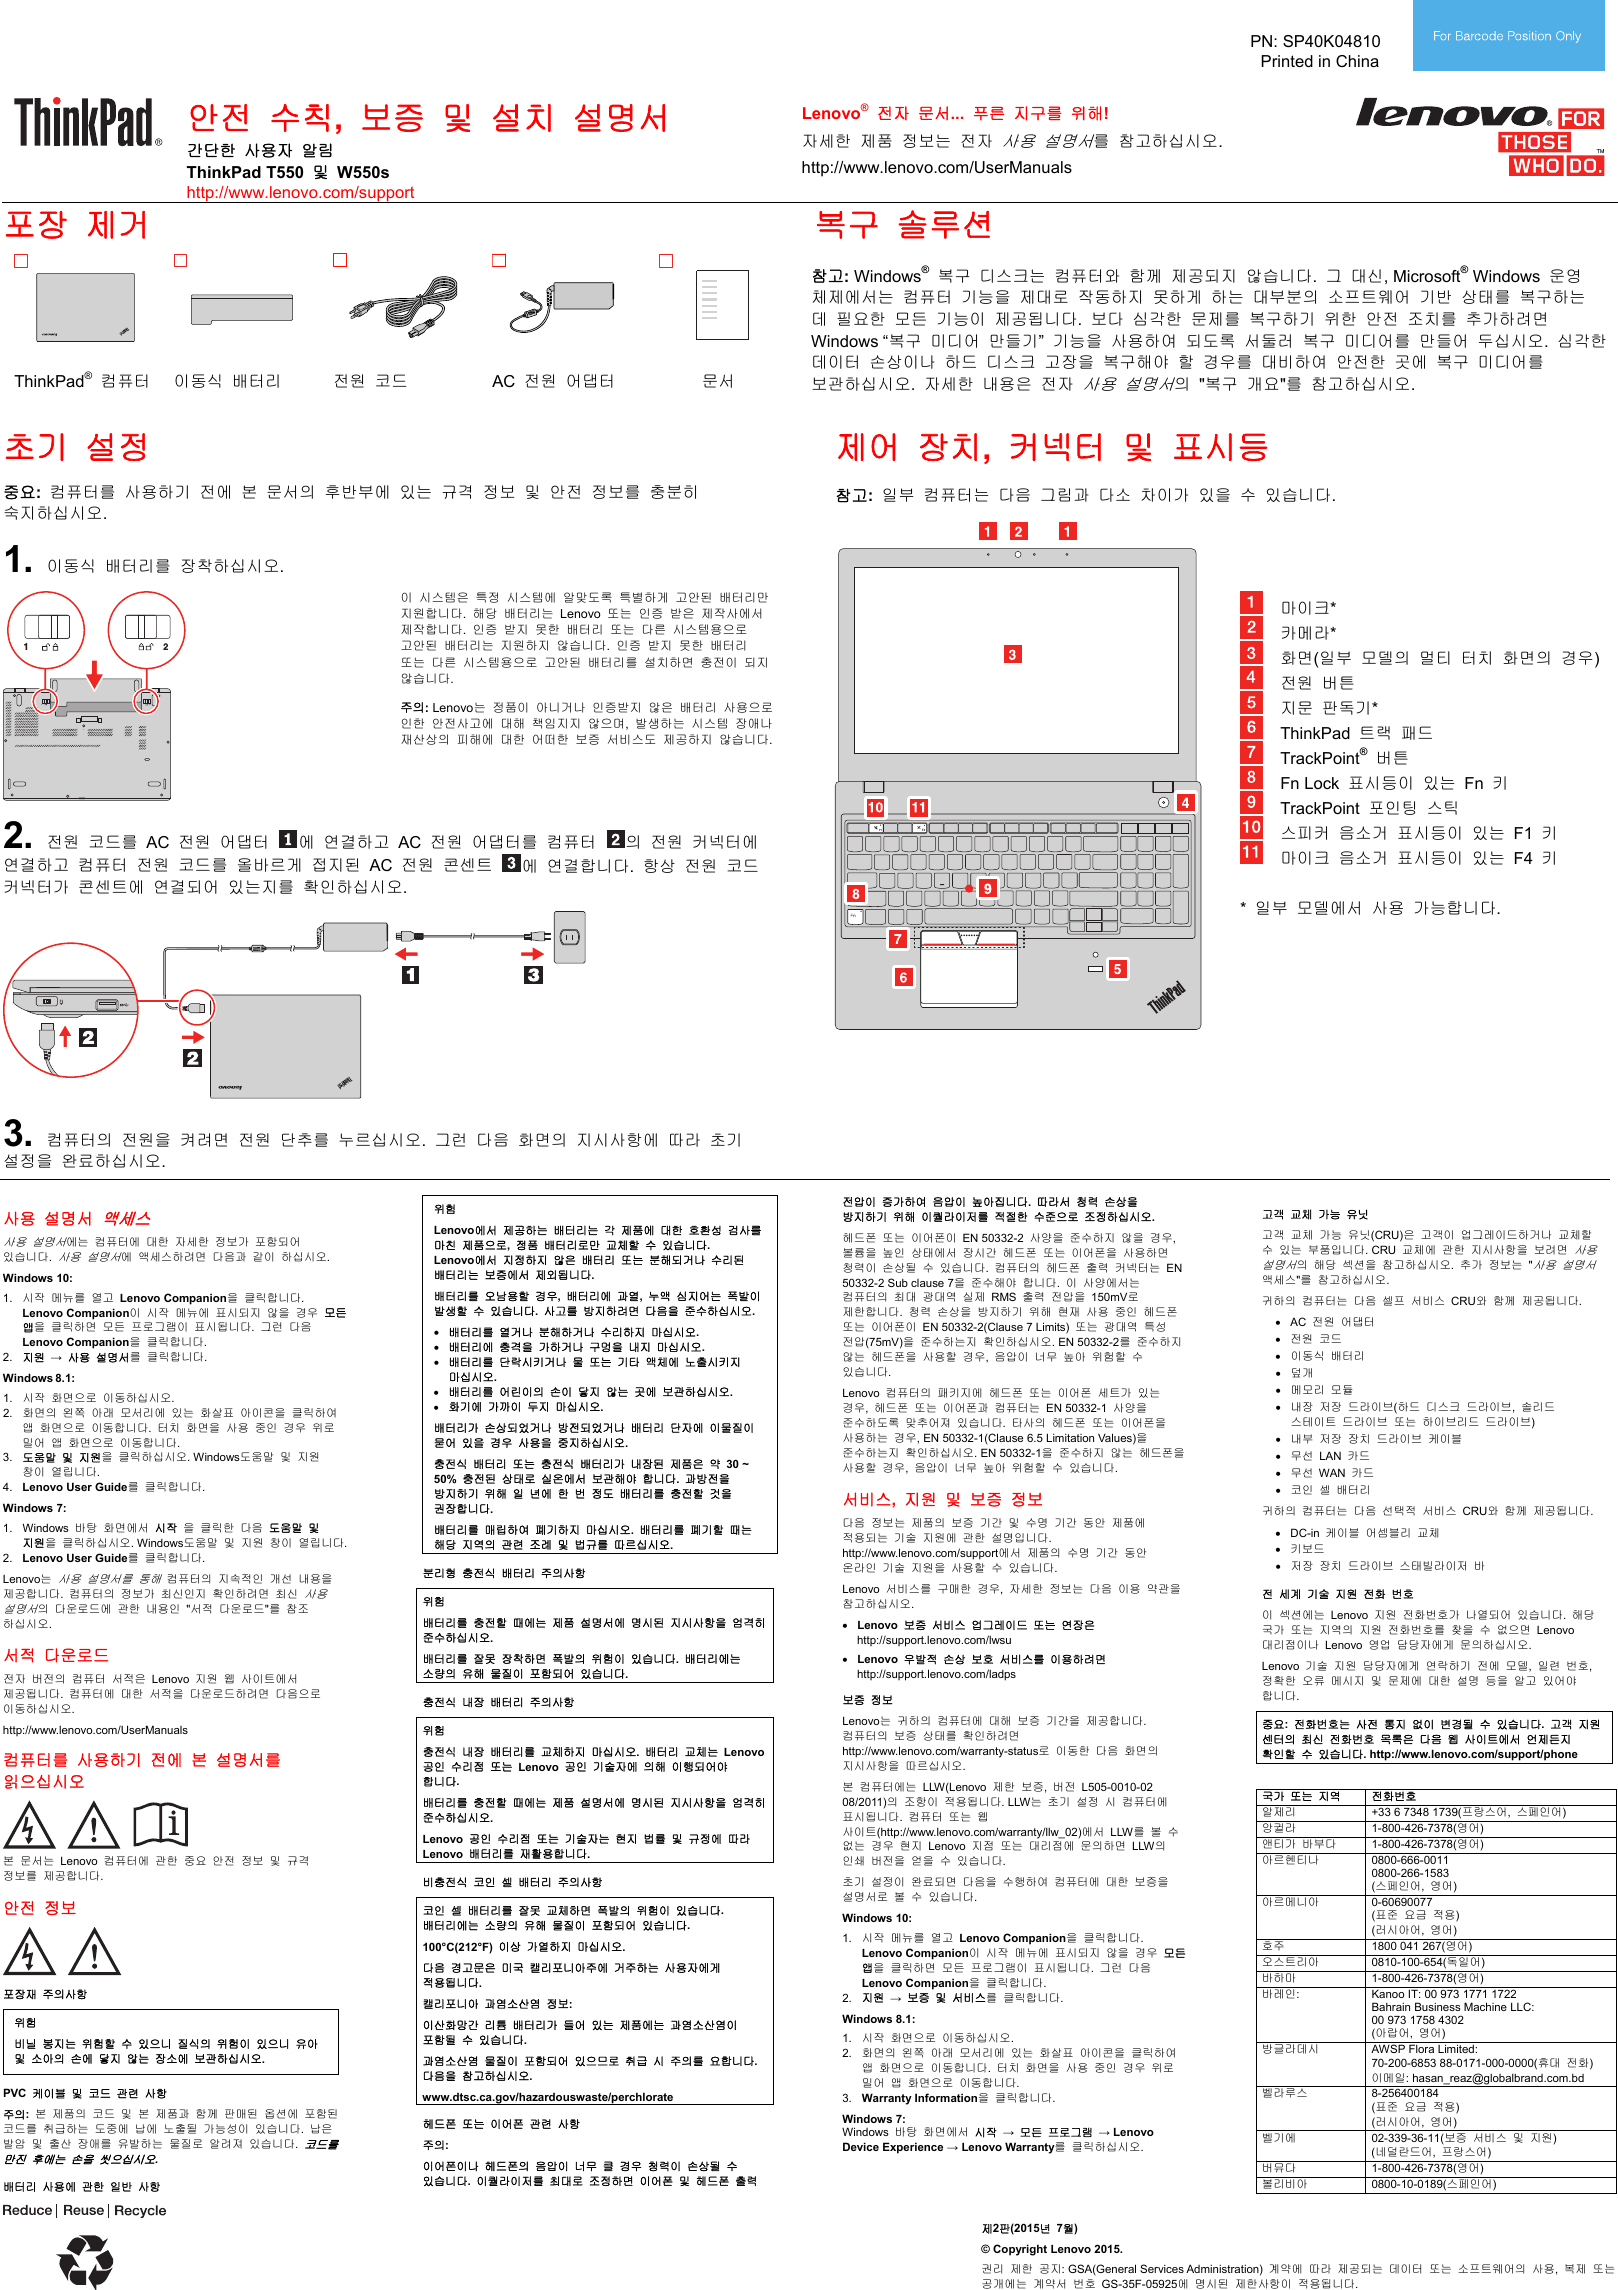 Page 1 of 2 - Lenovo T550 W550S Swsg Ko Sp40K04810 ThinkPad And (Sazan) User Manual (Korean) Safety, Warranty, Setup Guide - Think Pad T550, Laptop (Think Pad)